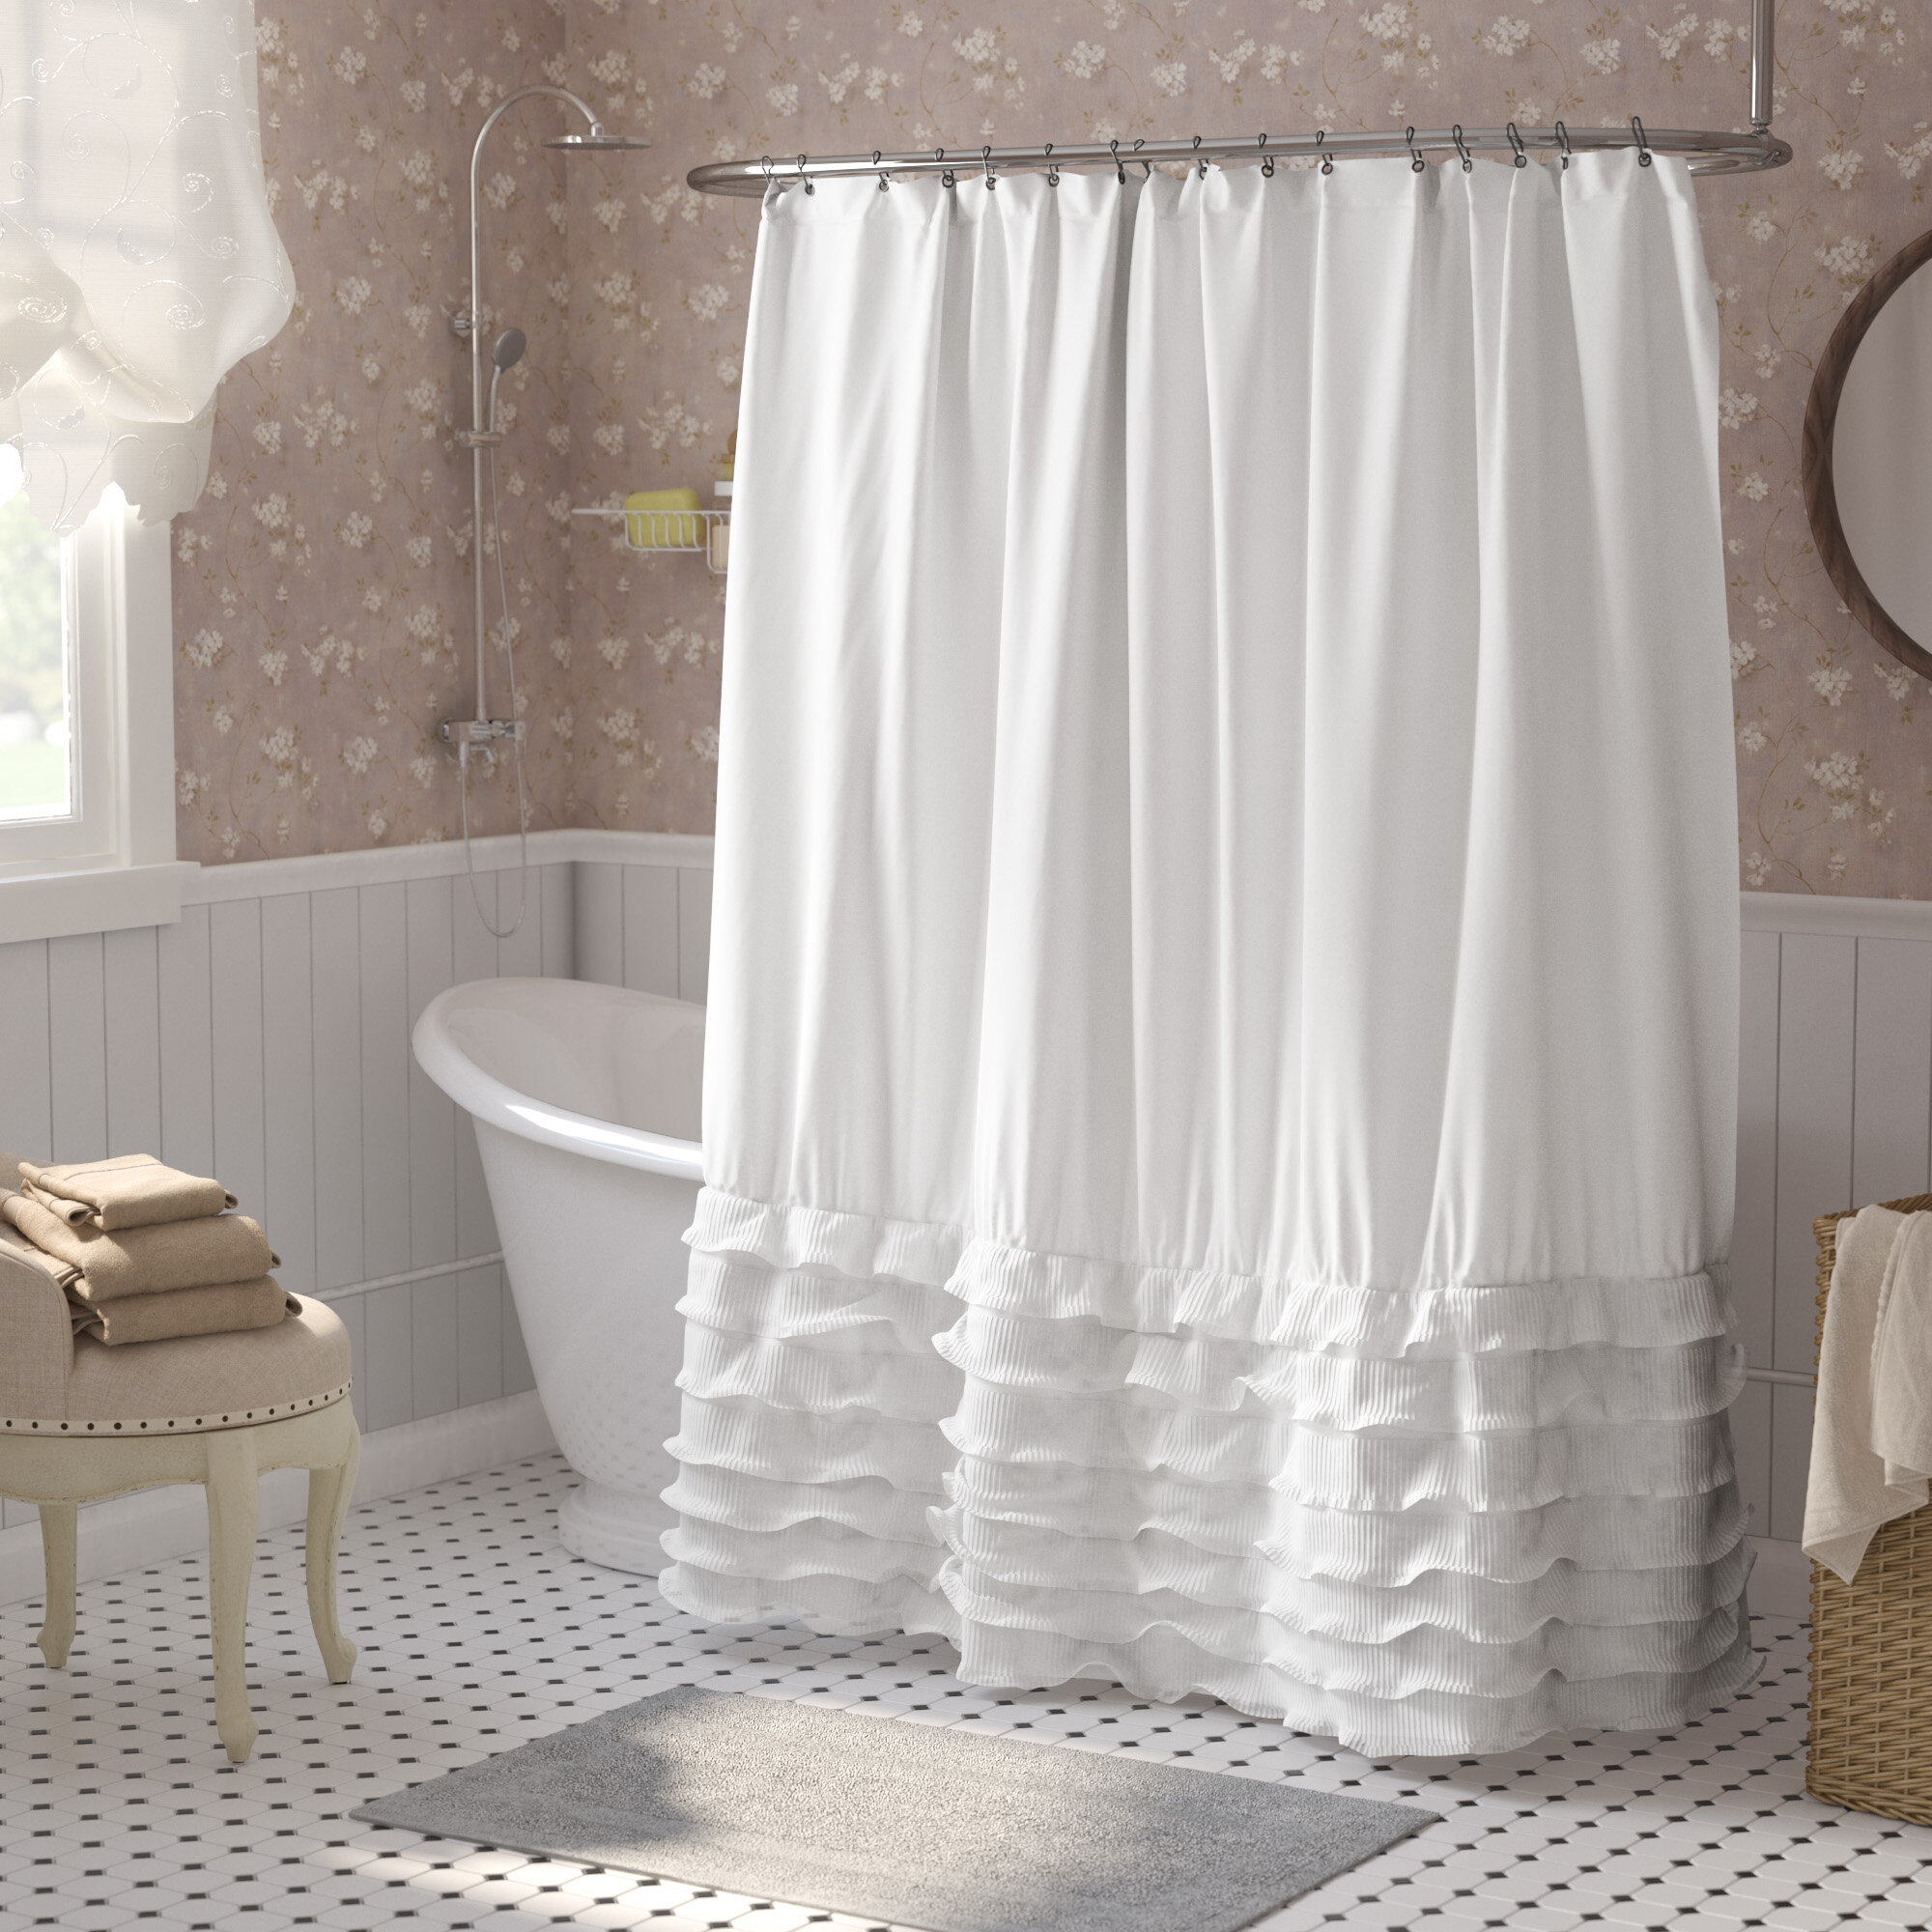 Clawfoot Tub Shower Curtain Visualhunt, What Size Shower Curtain For A Clawfoot Tub